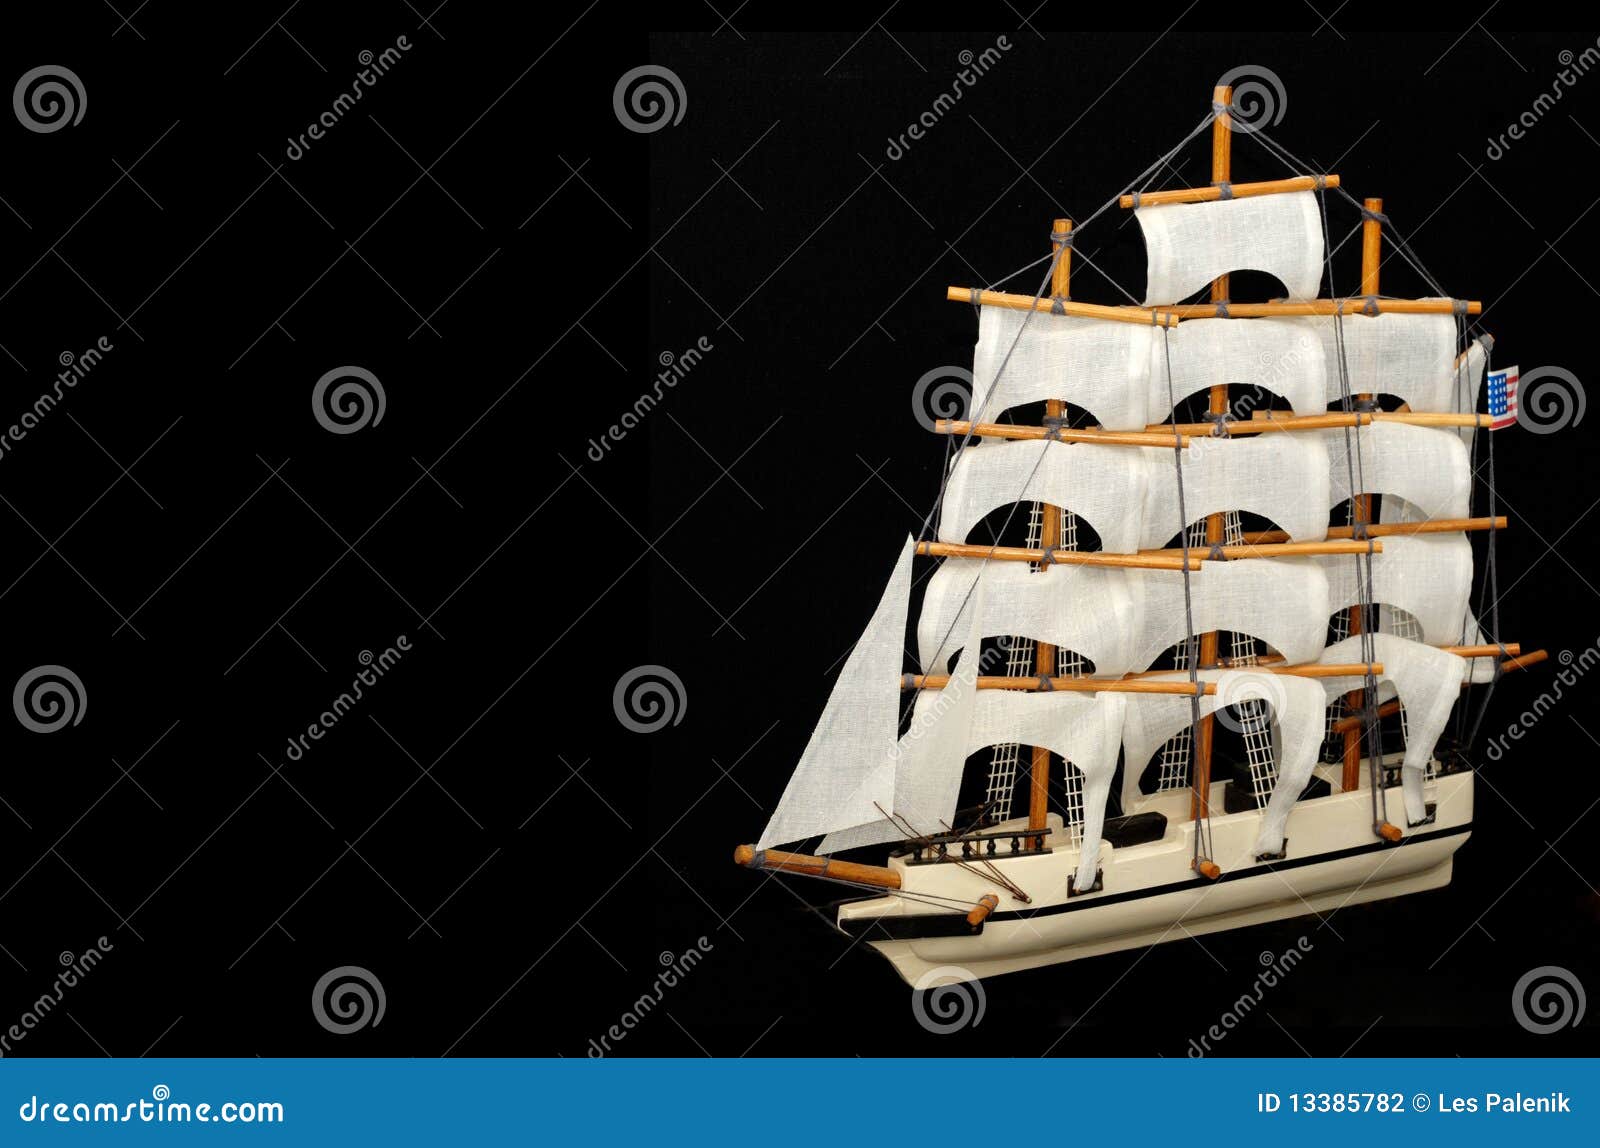 Replica model of 1846 whaling ship Clipper.